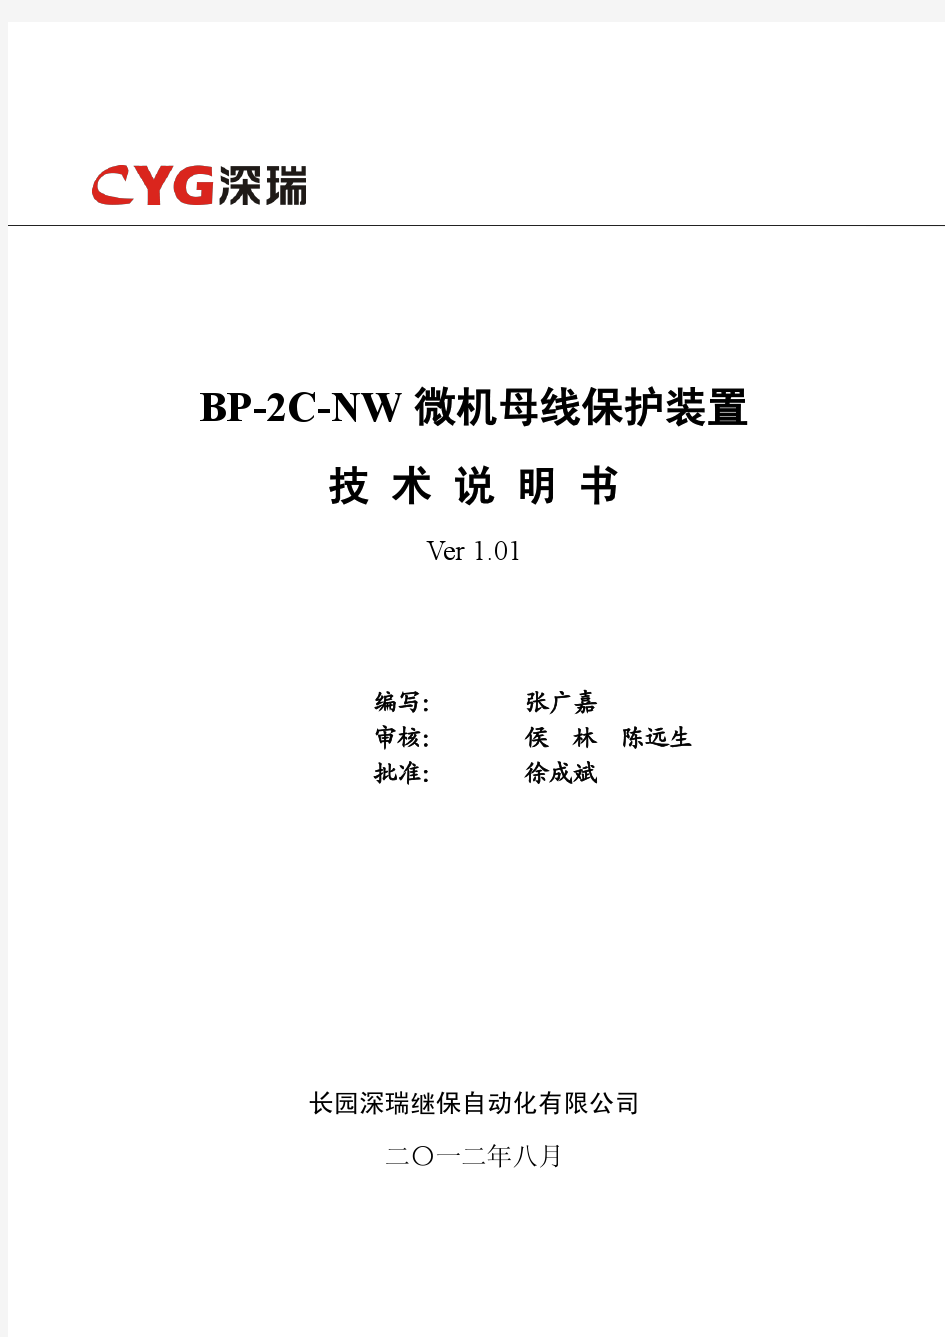 BP-2C-NW微机母线保护装置技术说明书